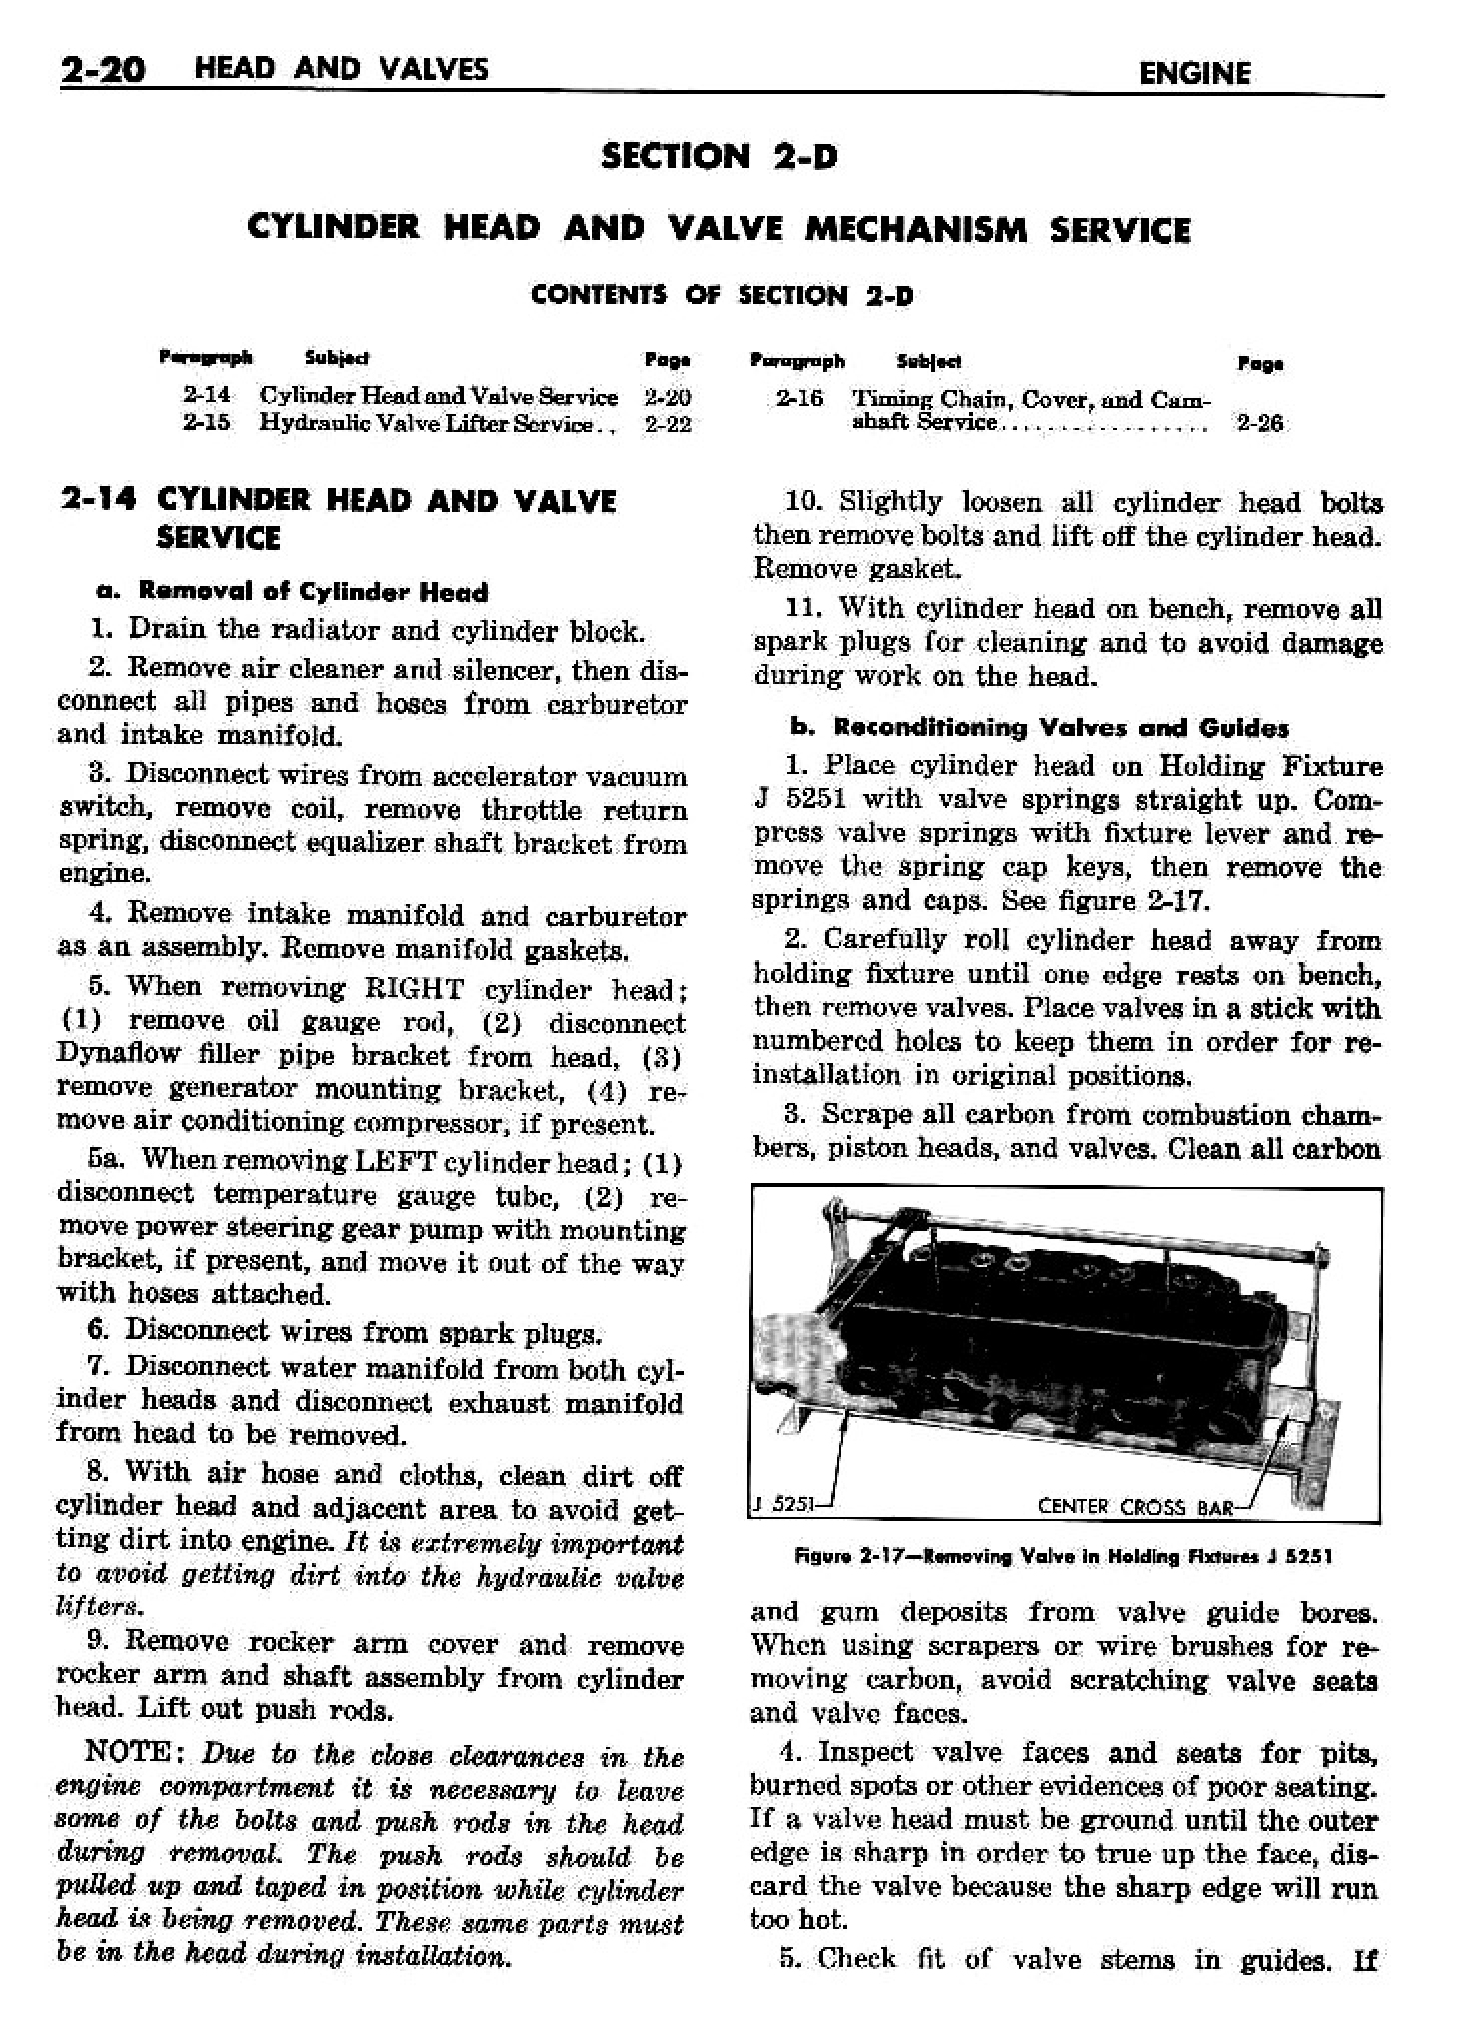 n_03 1958 Buick Shop Manual - Engine_20.jpg